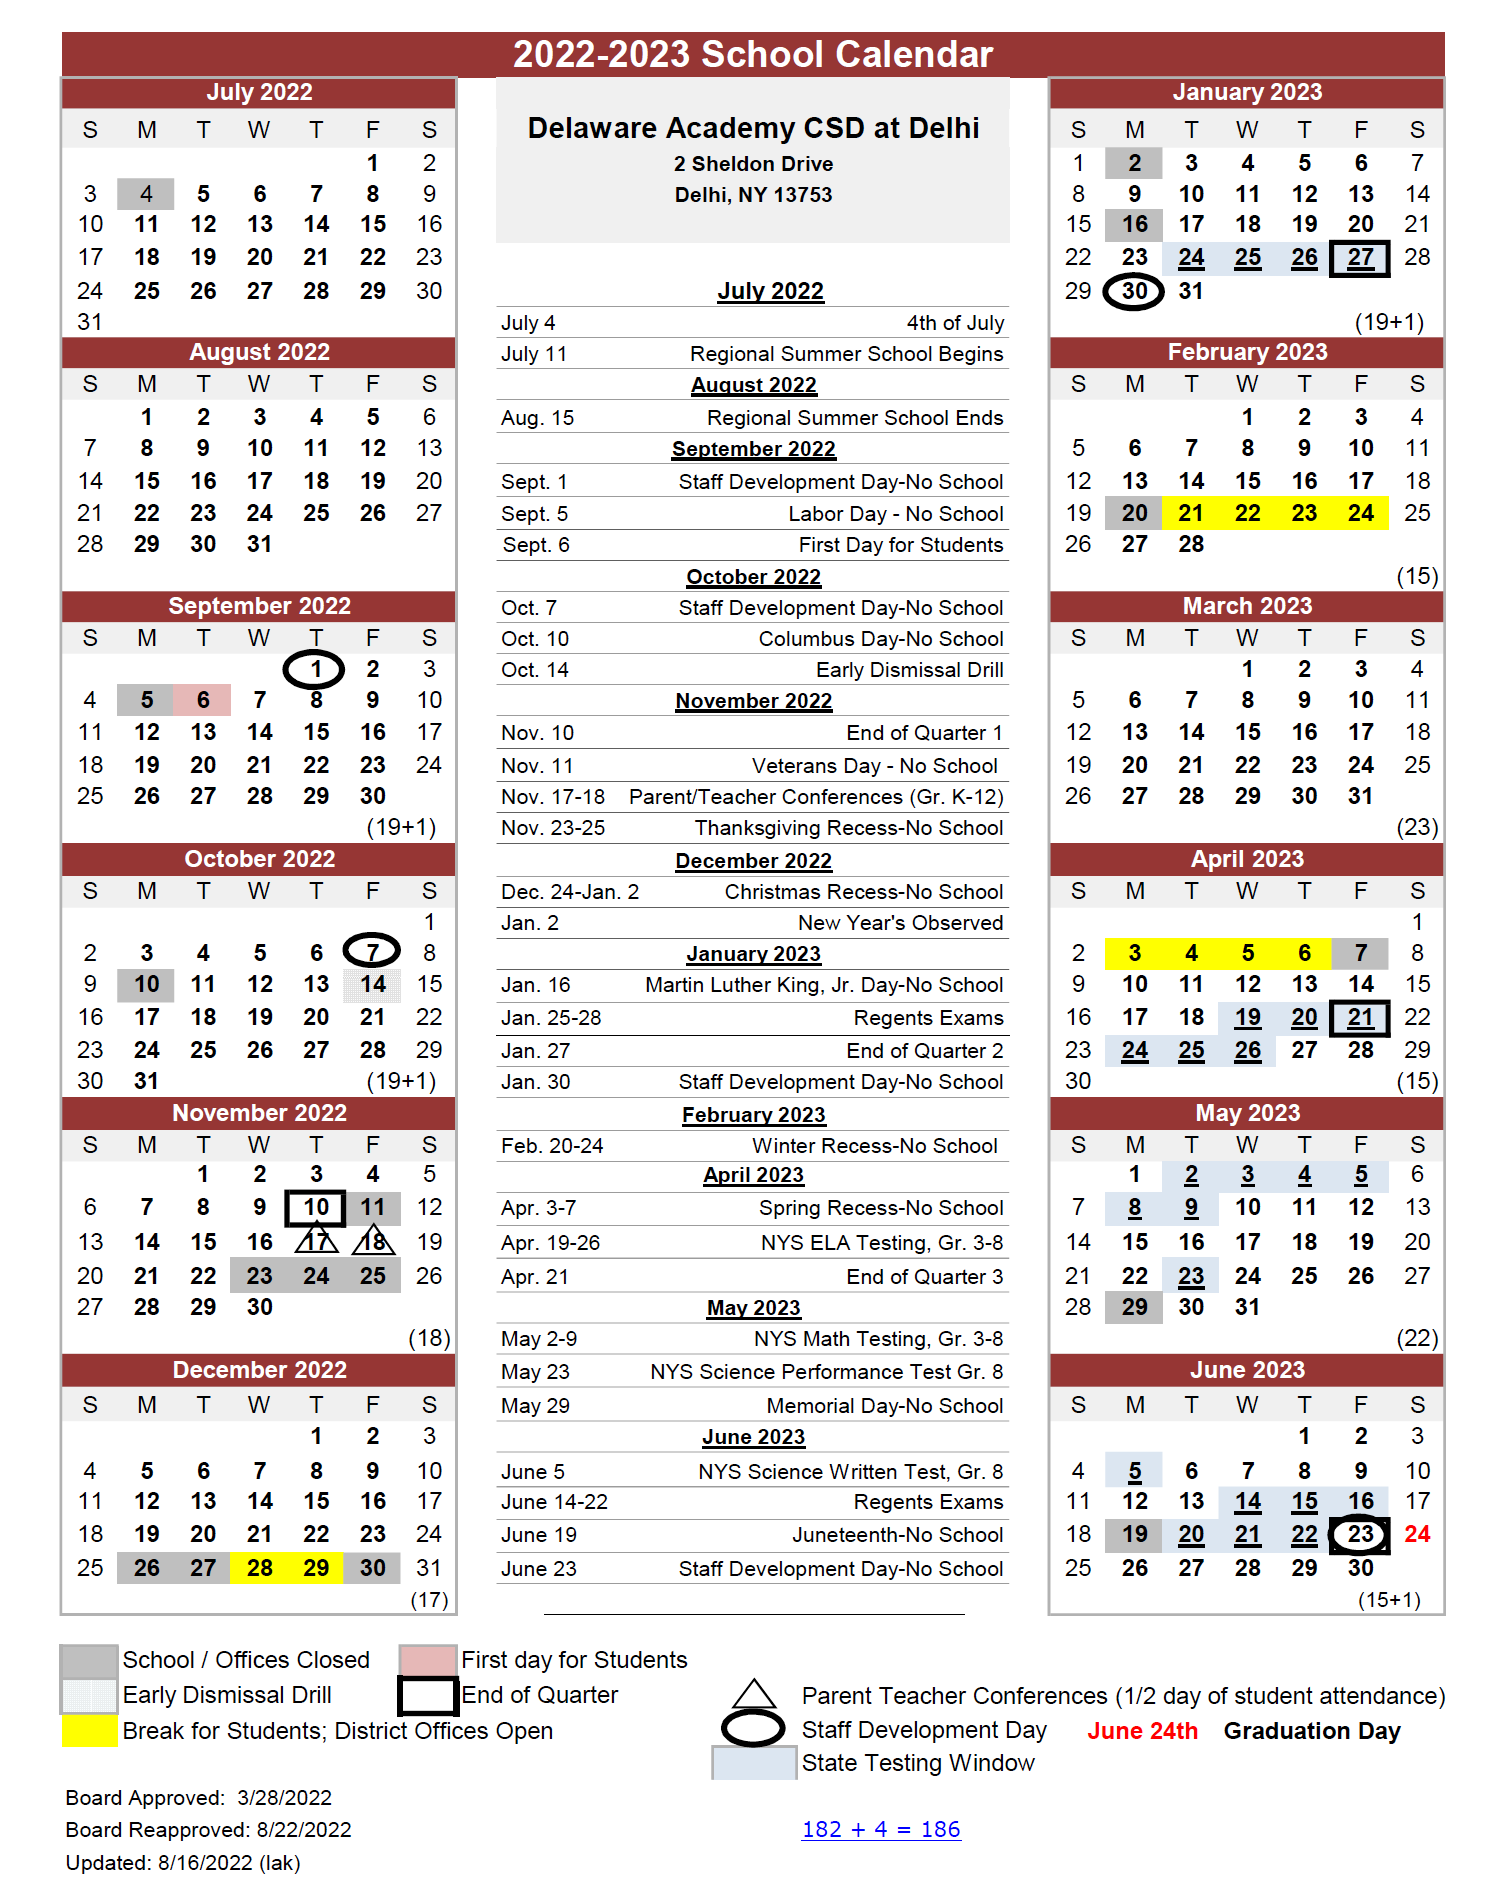 Academic Calendar Delaware Academy CSD at Delhi